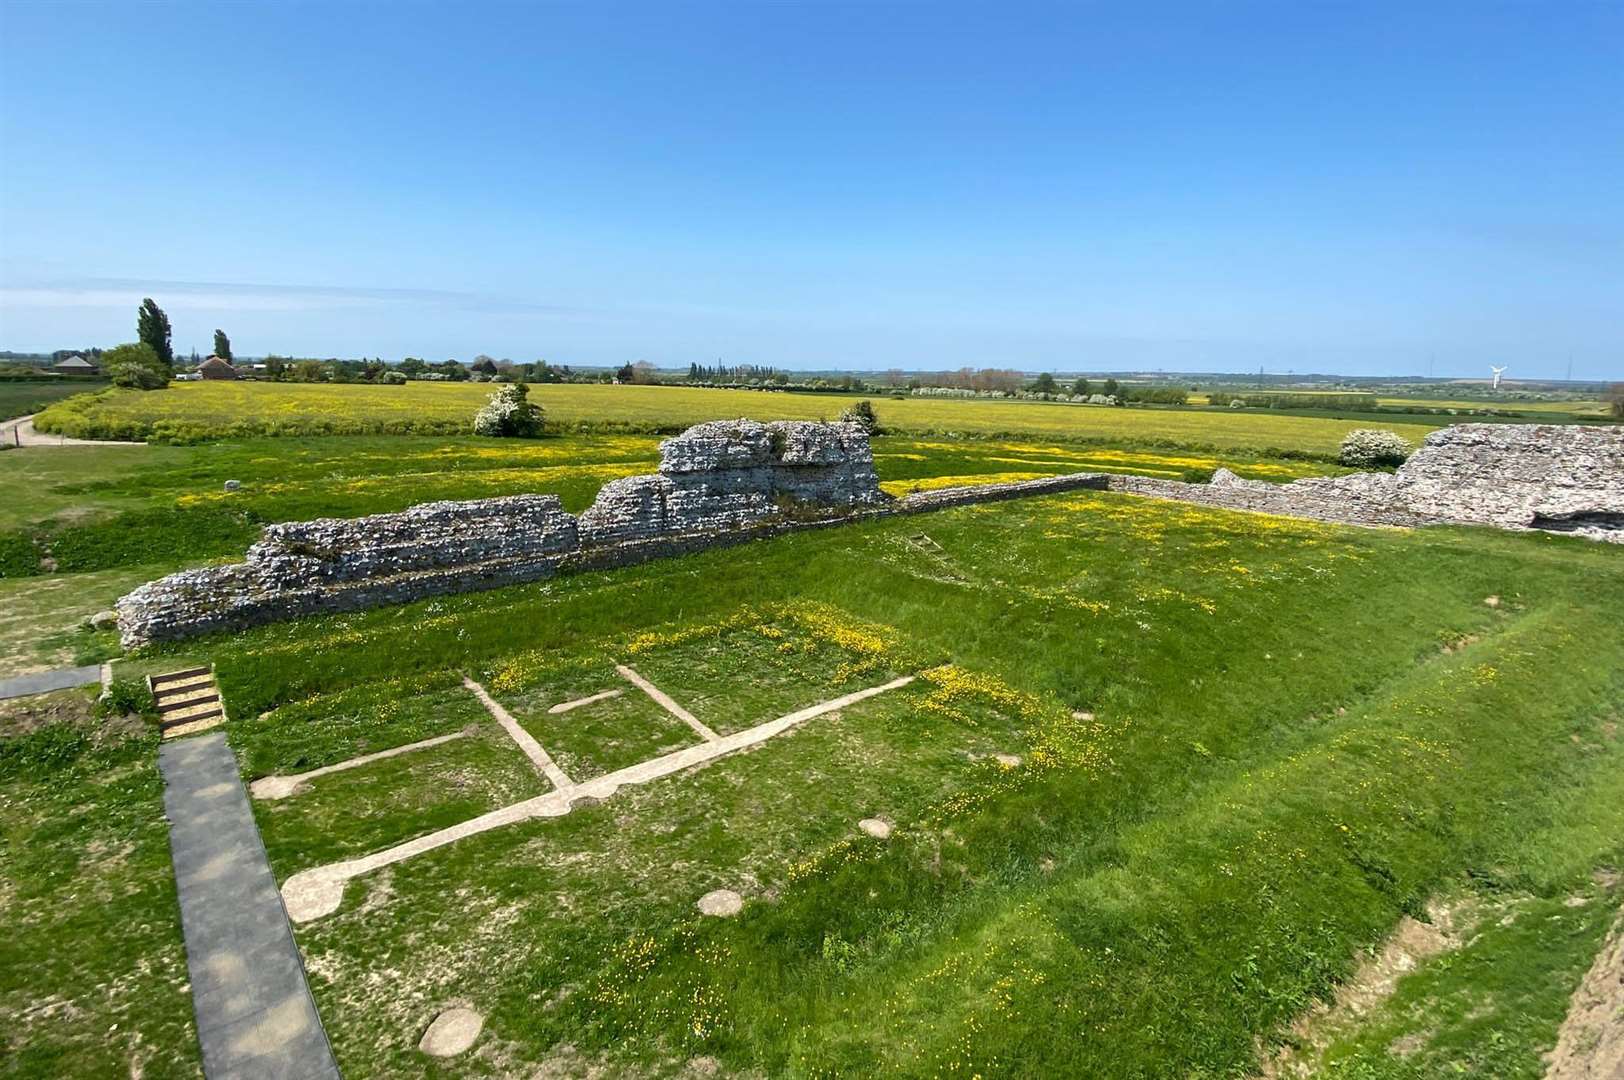 The Richborough Roman Fort and Amphitheatre near Sandwich